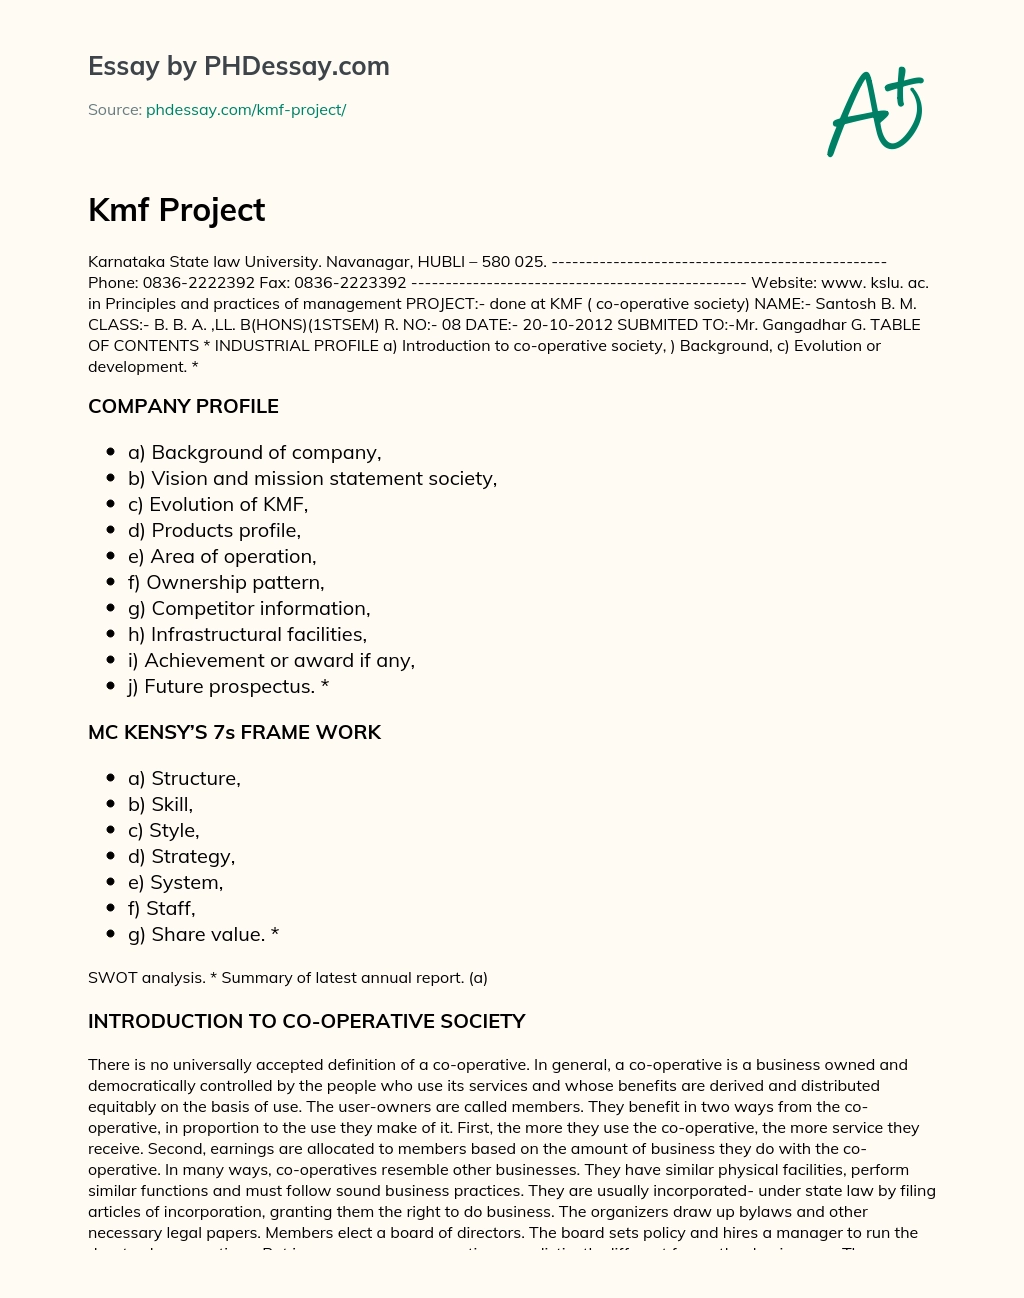 Kmf Project essay